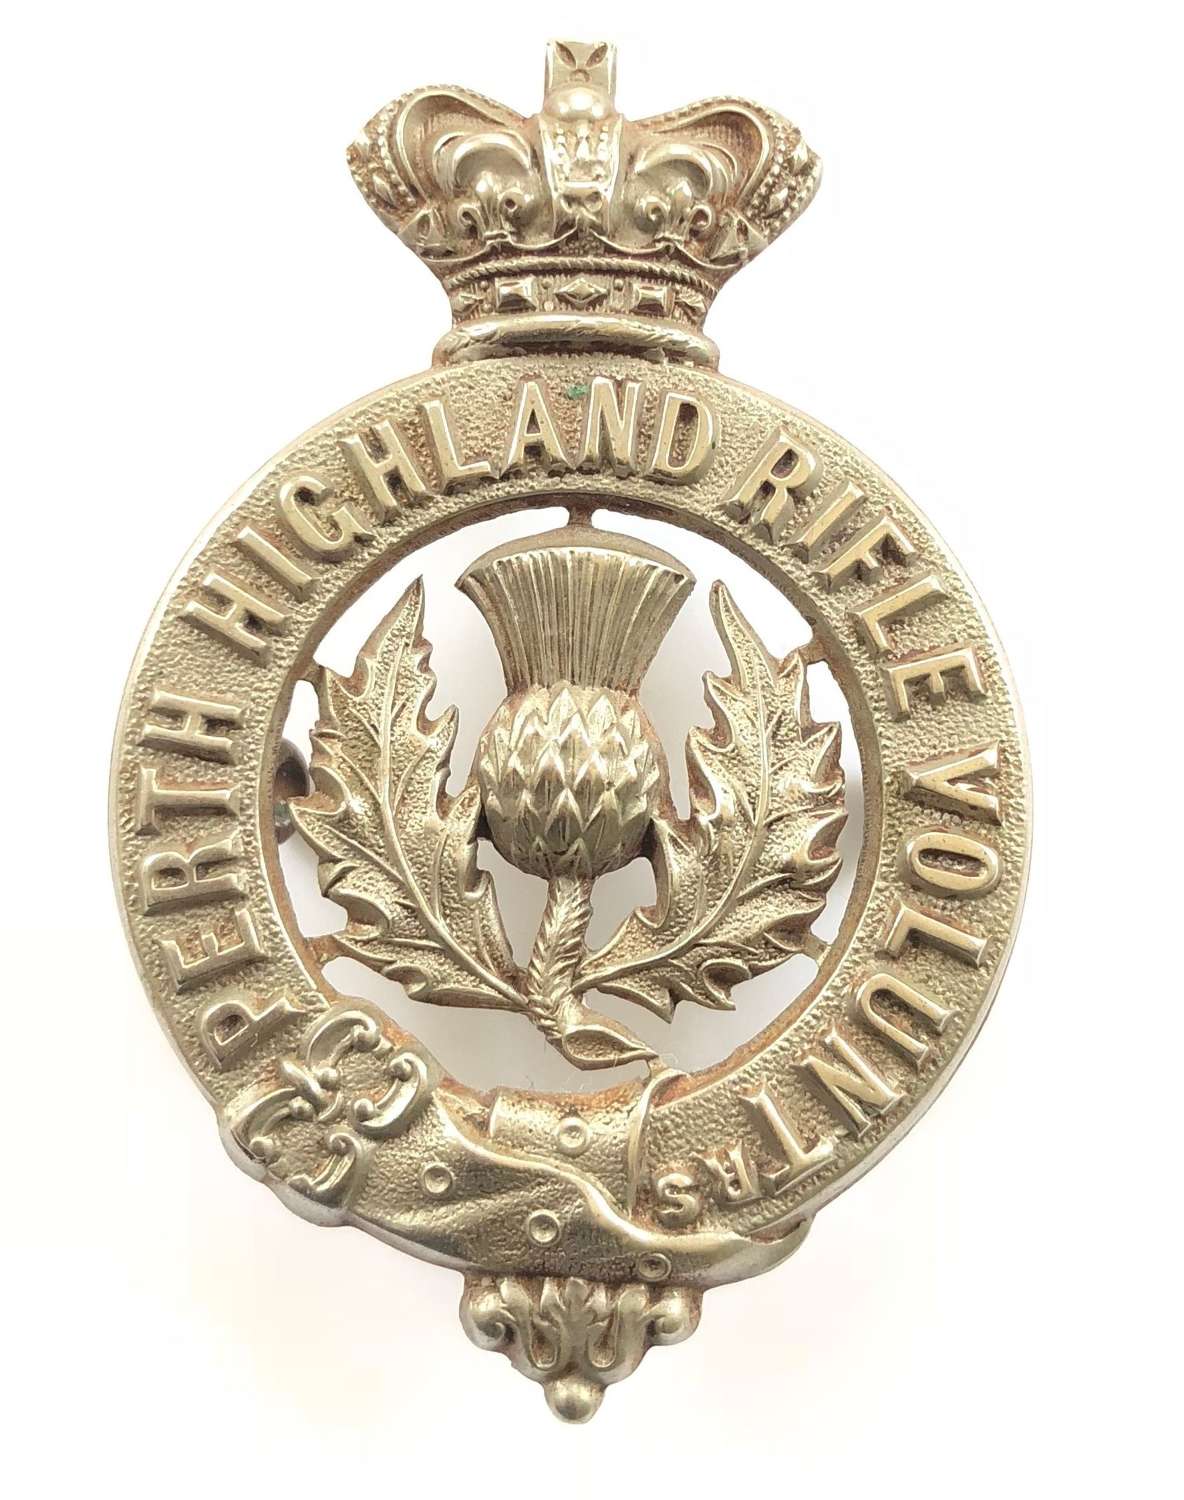 Perth Highland Rifle Volunteers glengarry badge circa 1874-87.